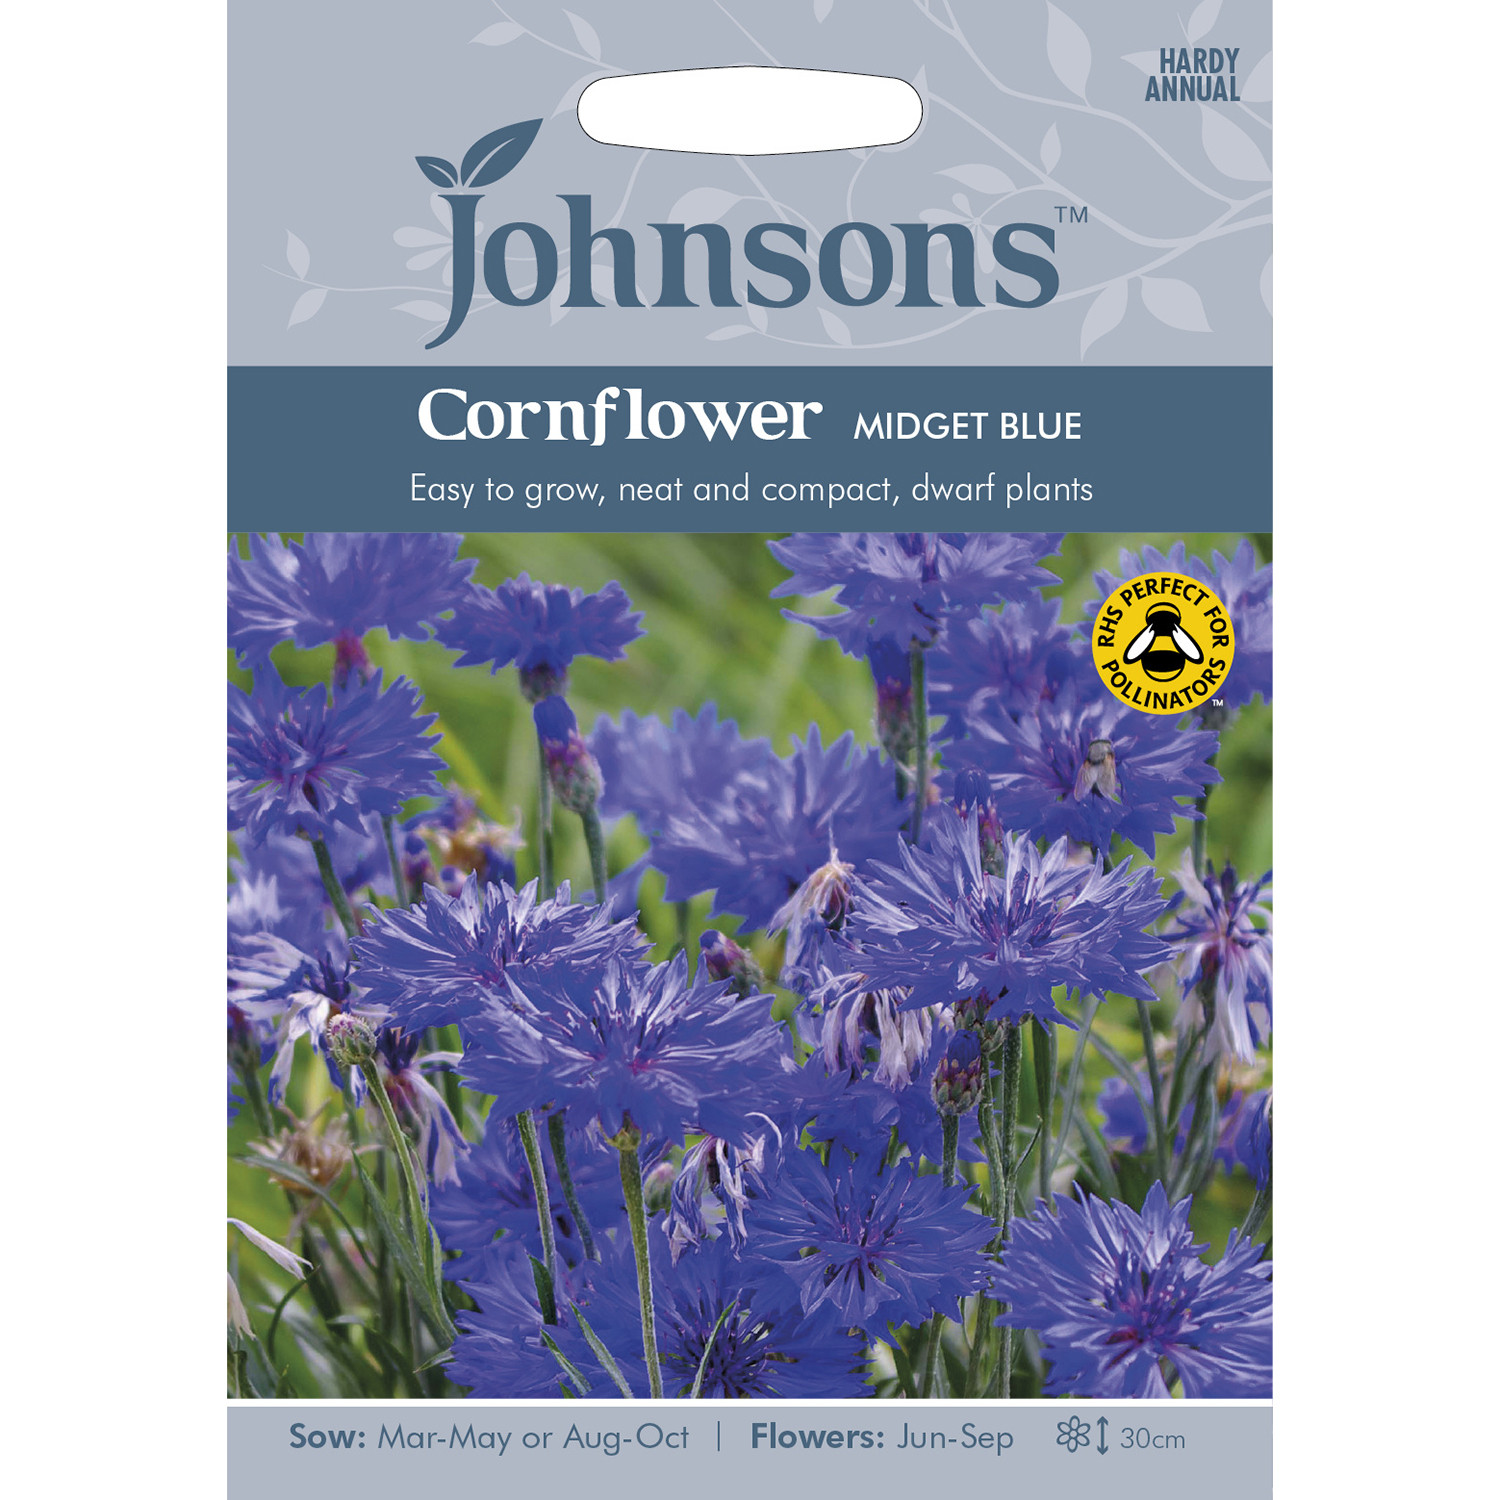 Johnsons Cornflower Midget Blue Flower Seeds Image 2